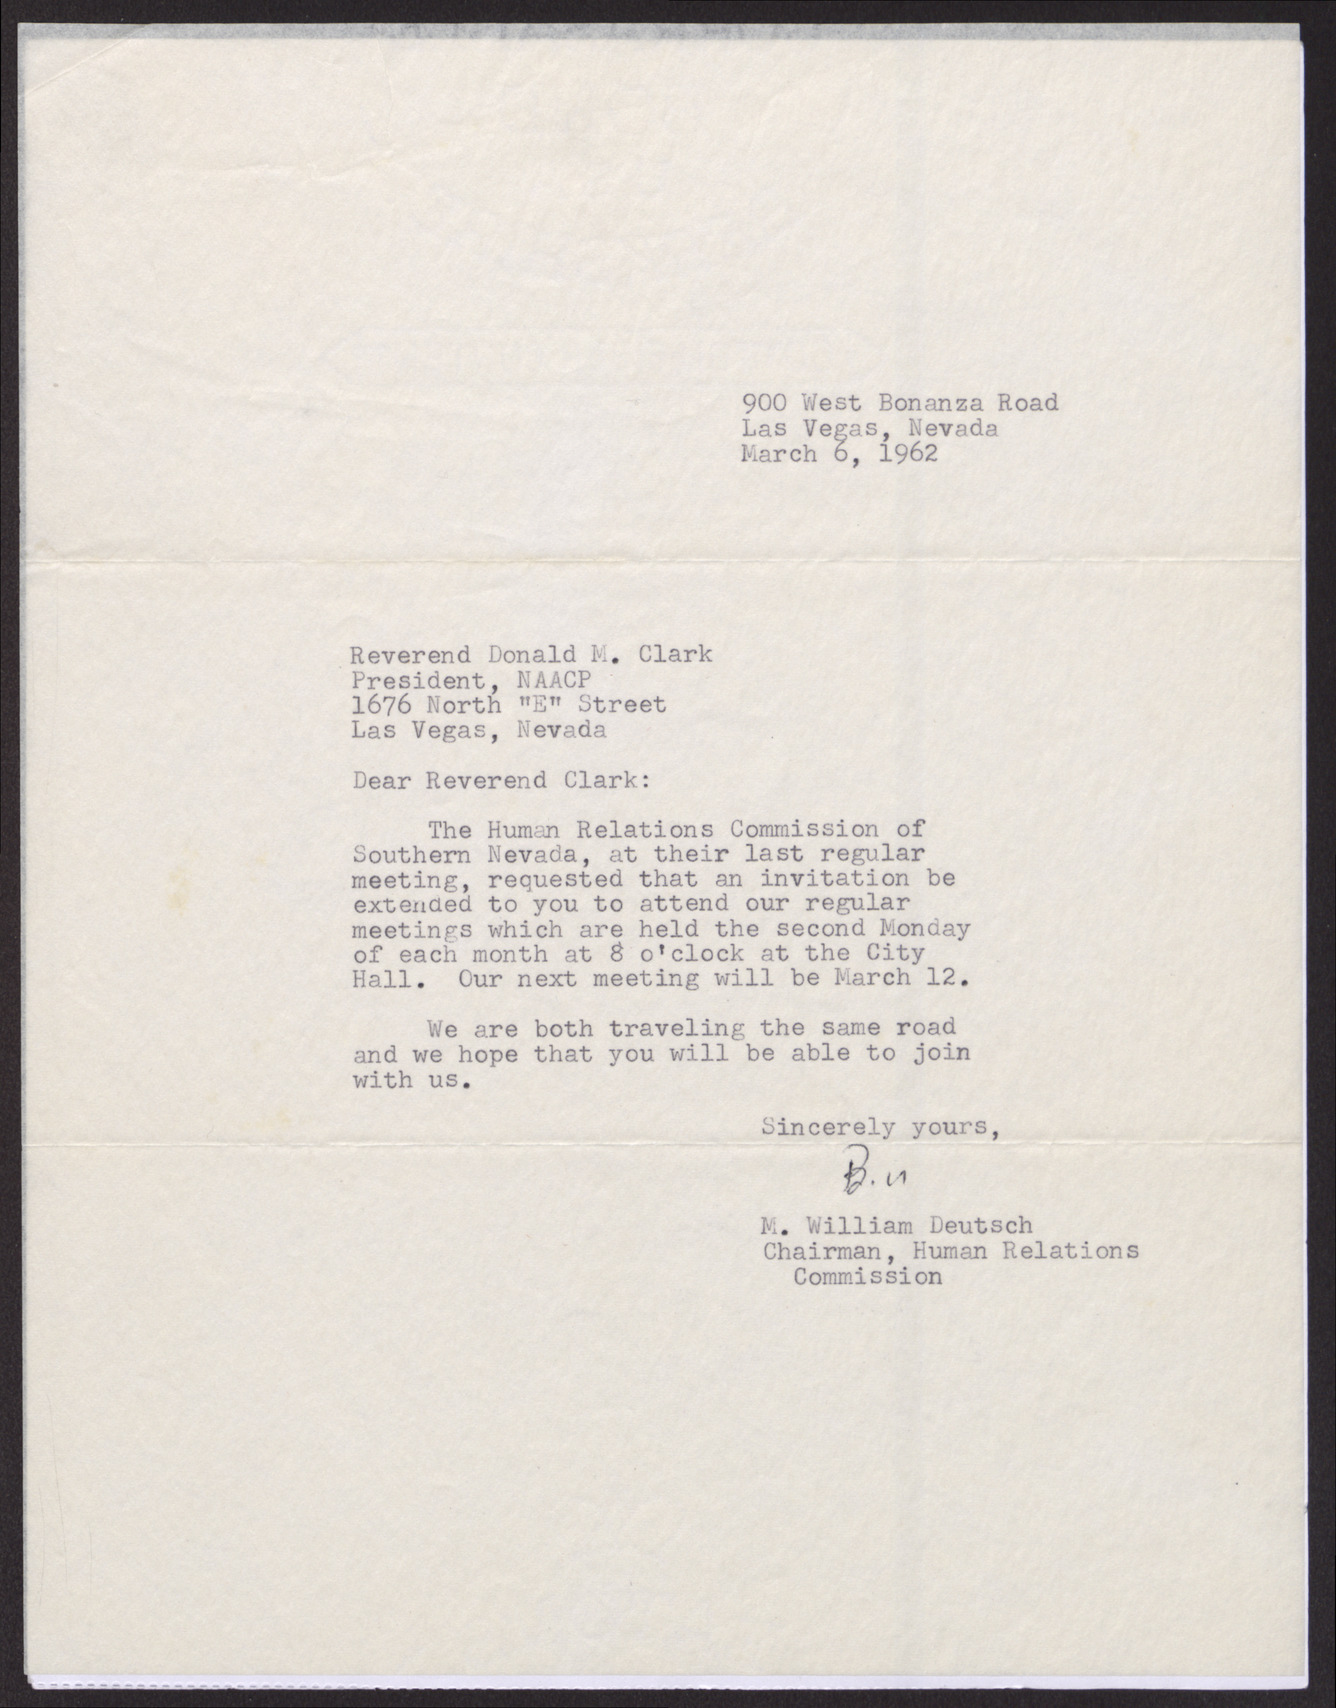 Letter to Reverend Donald M. Clark from M. William Deutsch, March 6, 1962